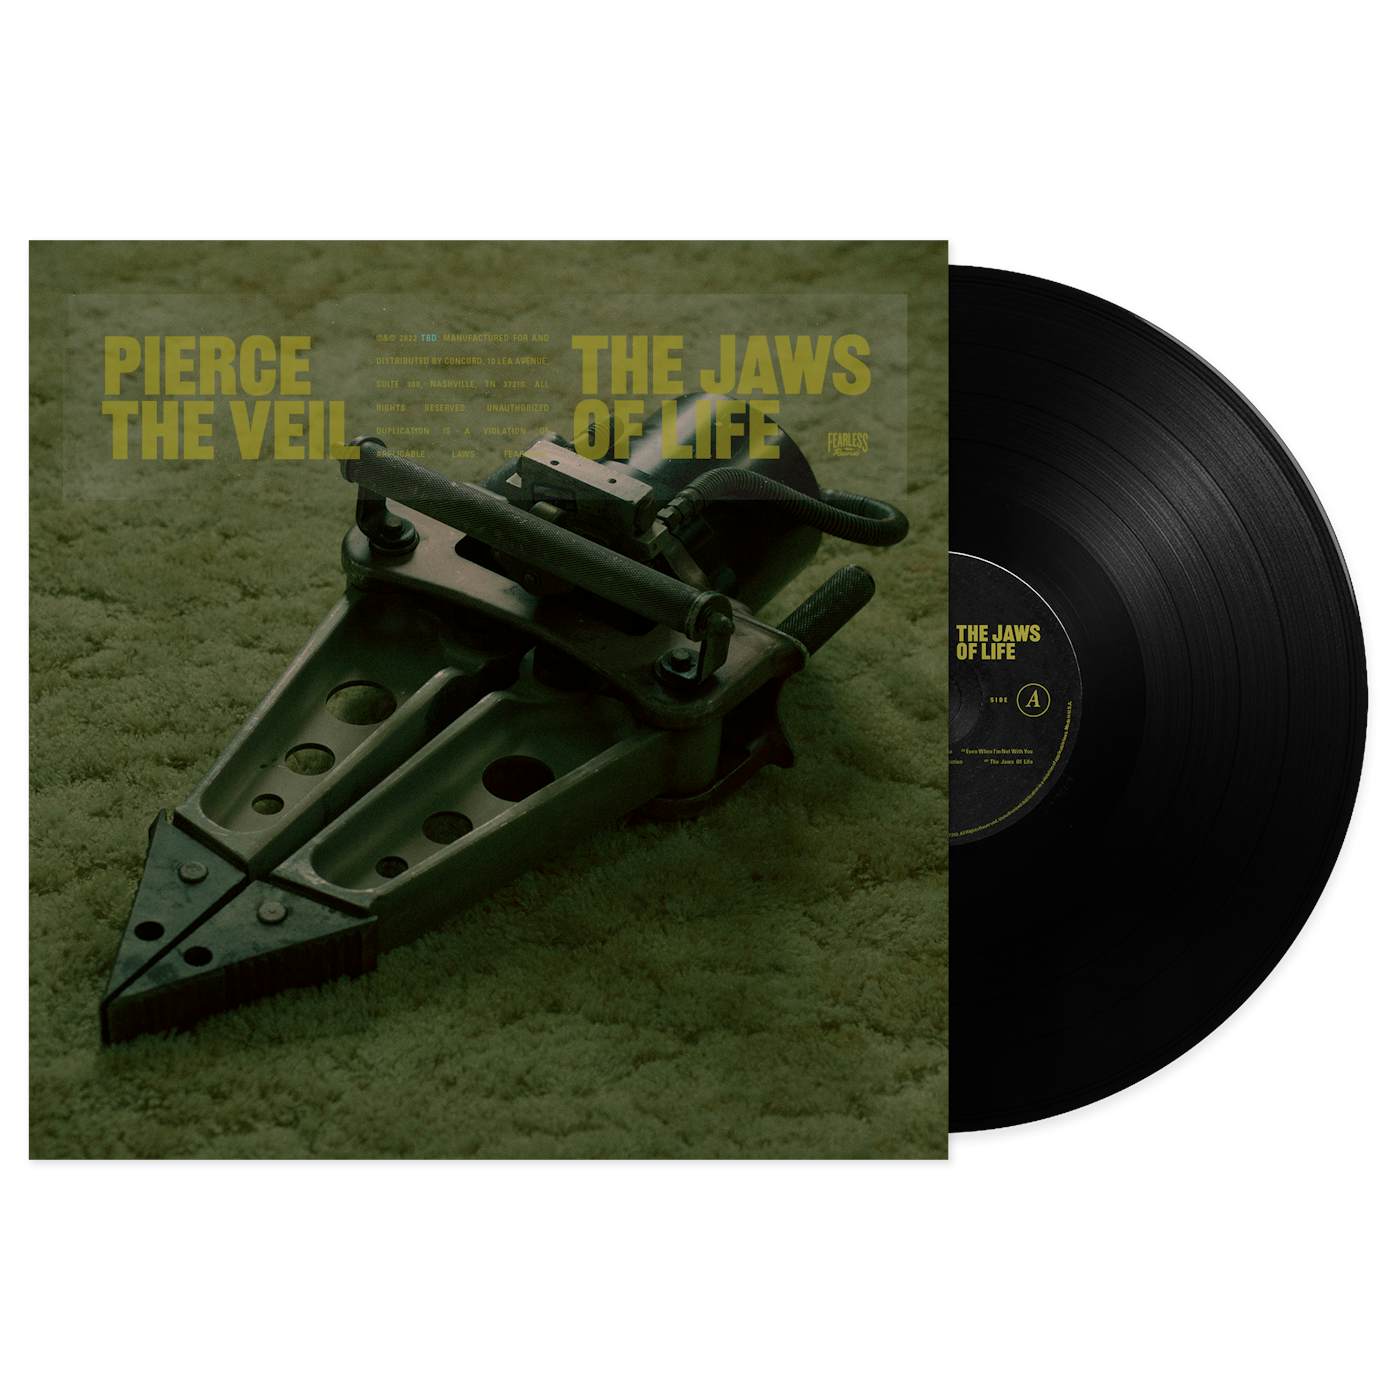 Pierce The Veil "The Jaws Of Life" Black Vinyl